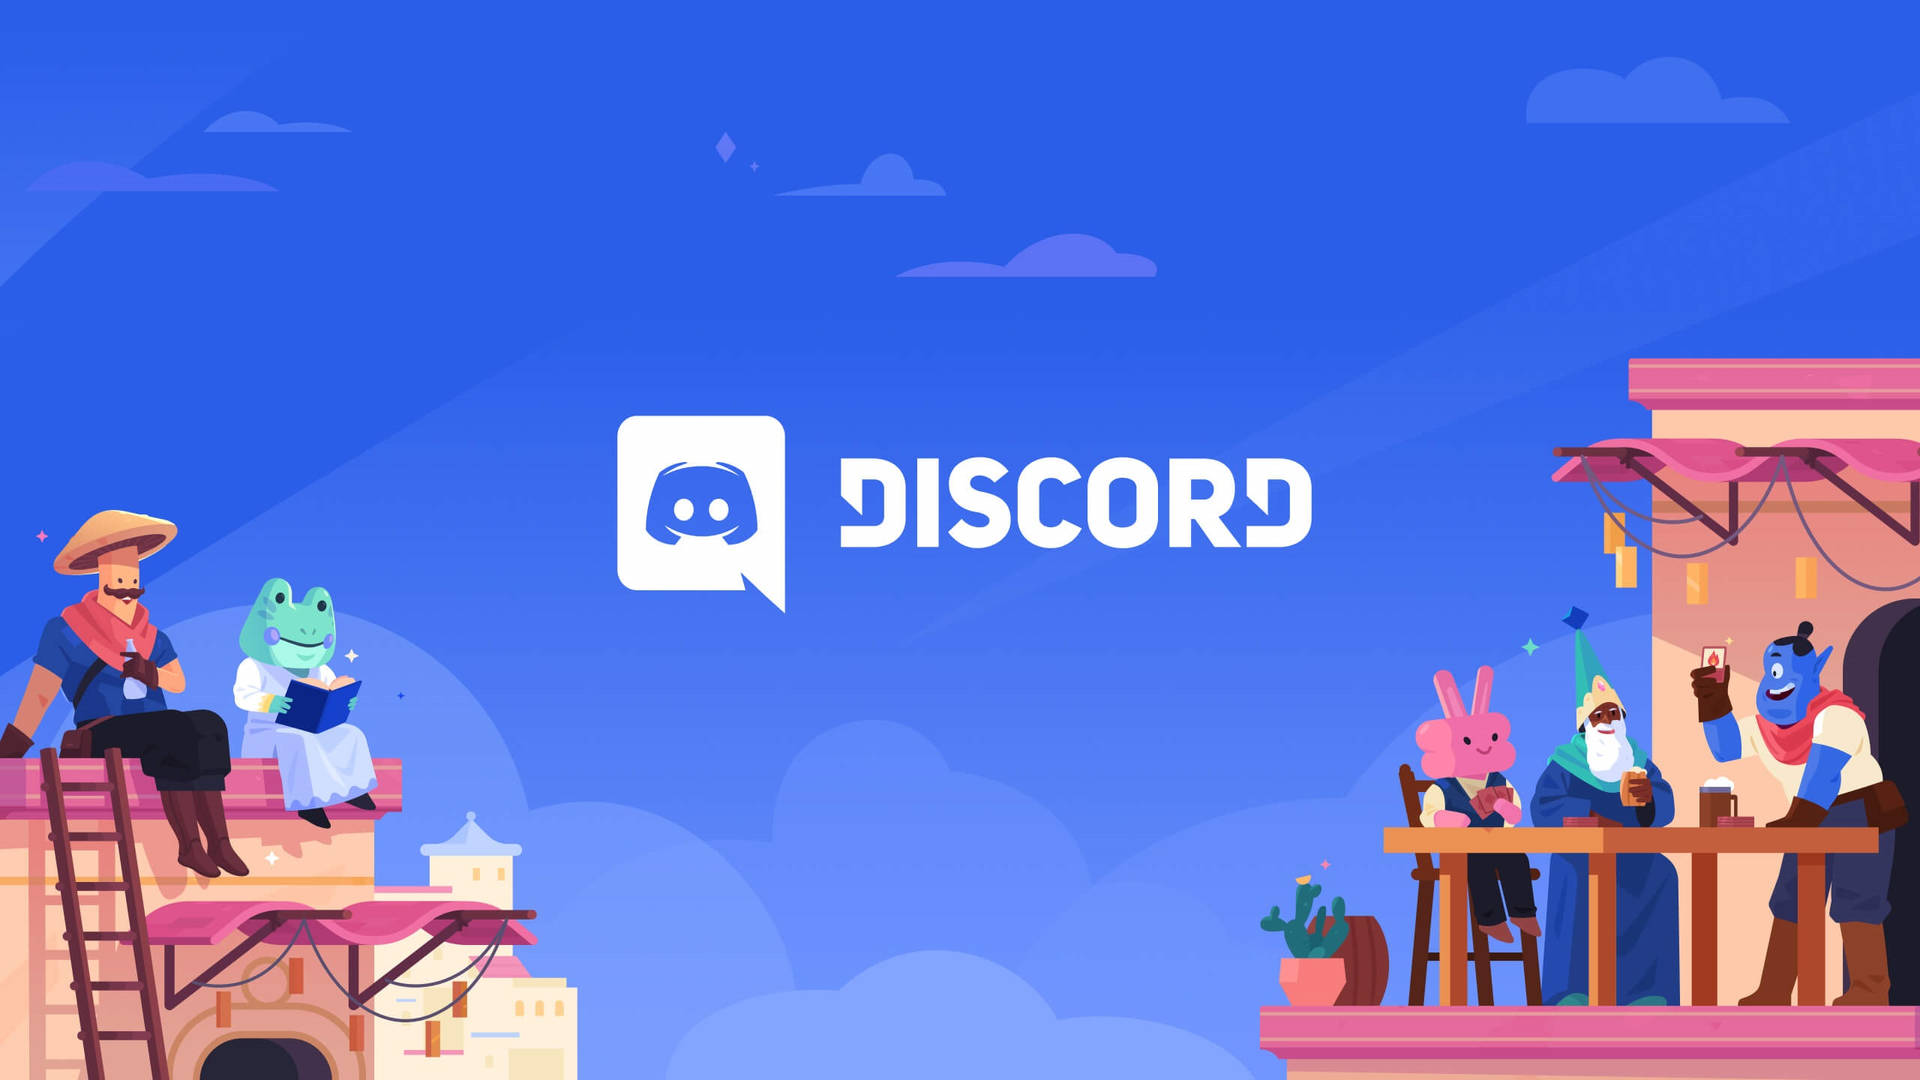 Discord Gaming Community Vector